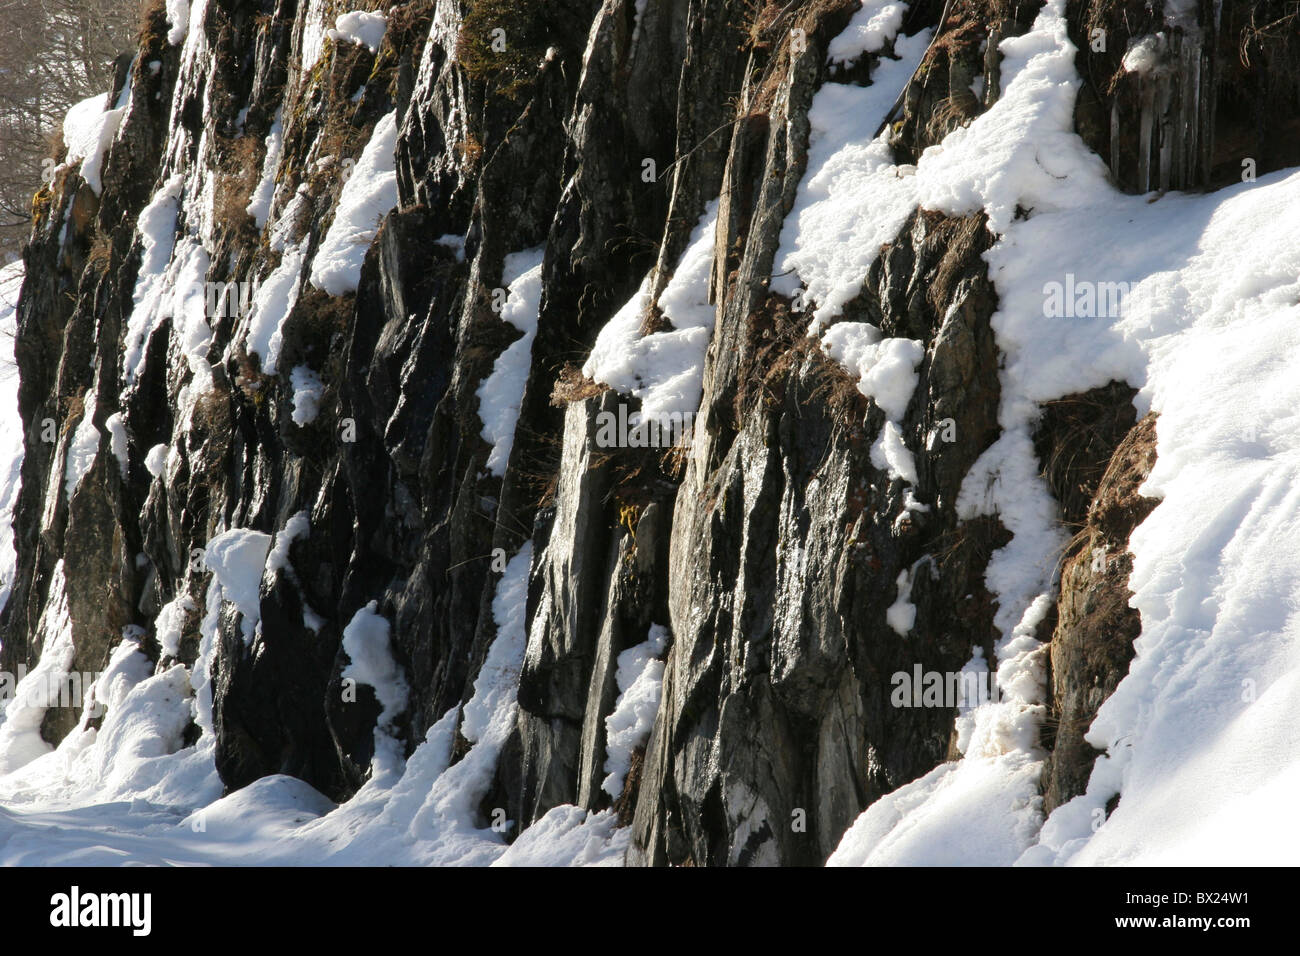 cliff ice mountains rock snow Switzerland Europe Valais winter landscape Stock Photo